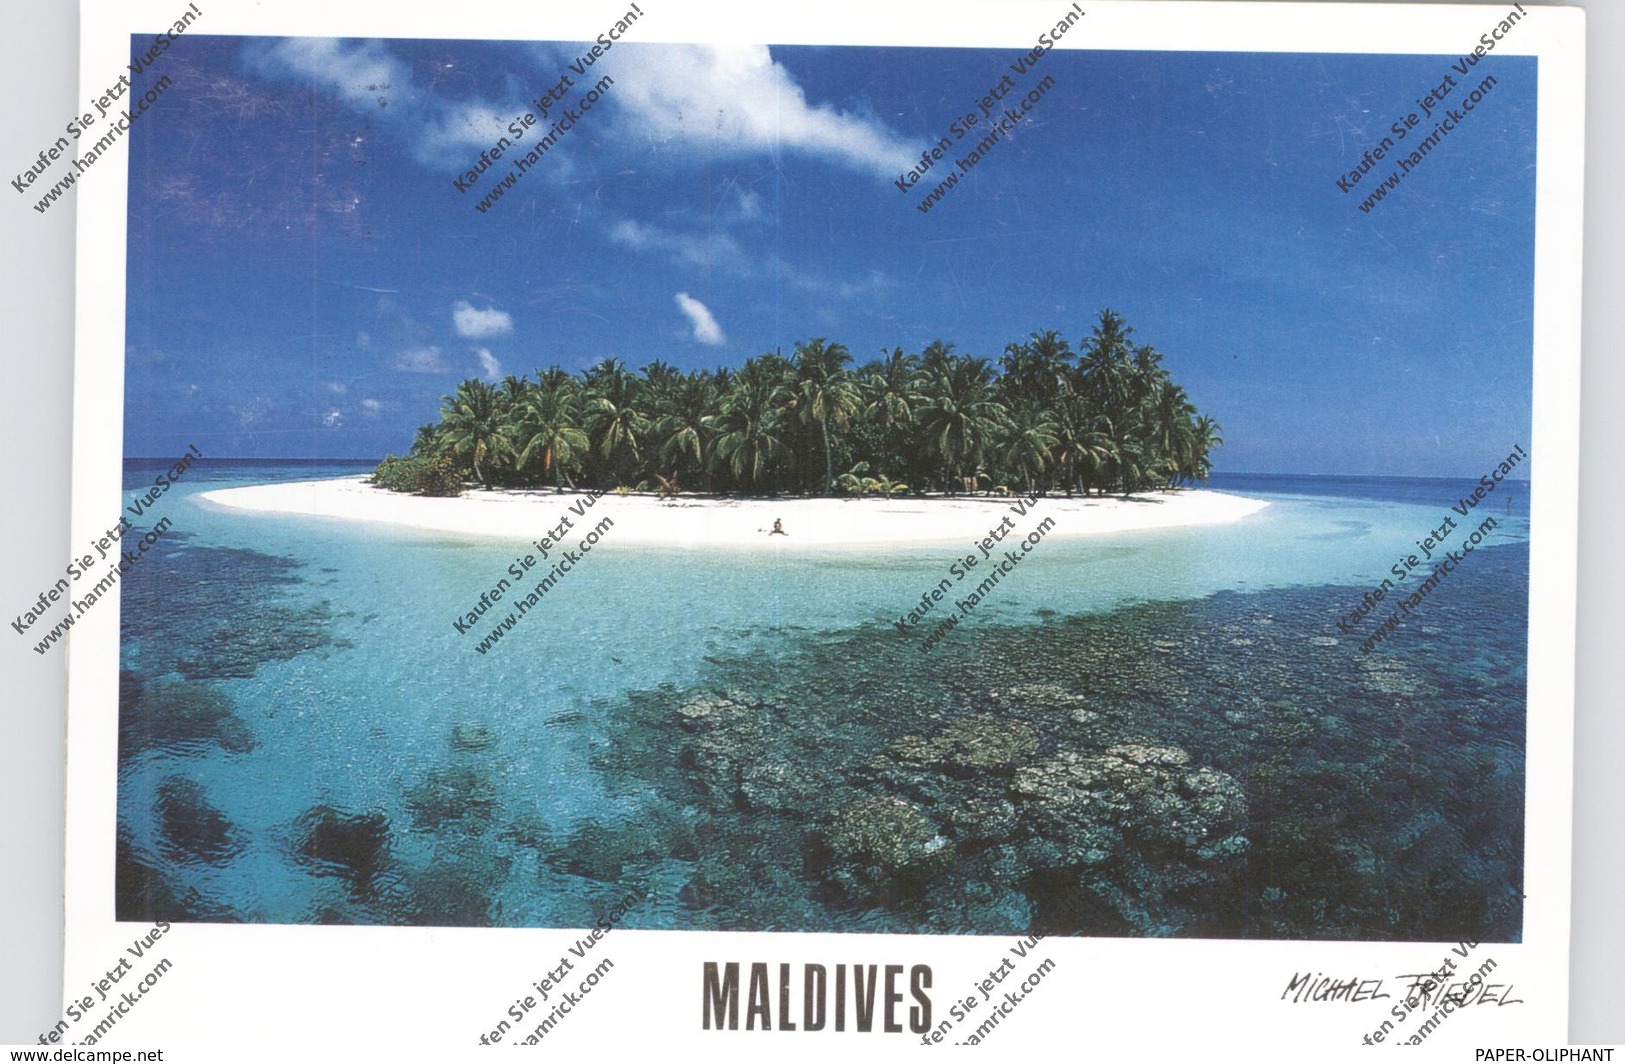 MALEDIVES, Atoll - Maldive